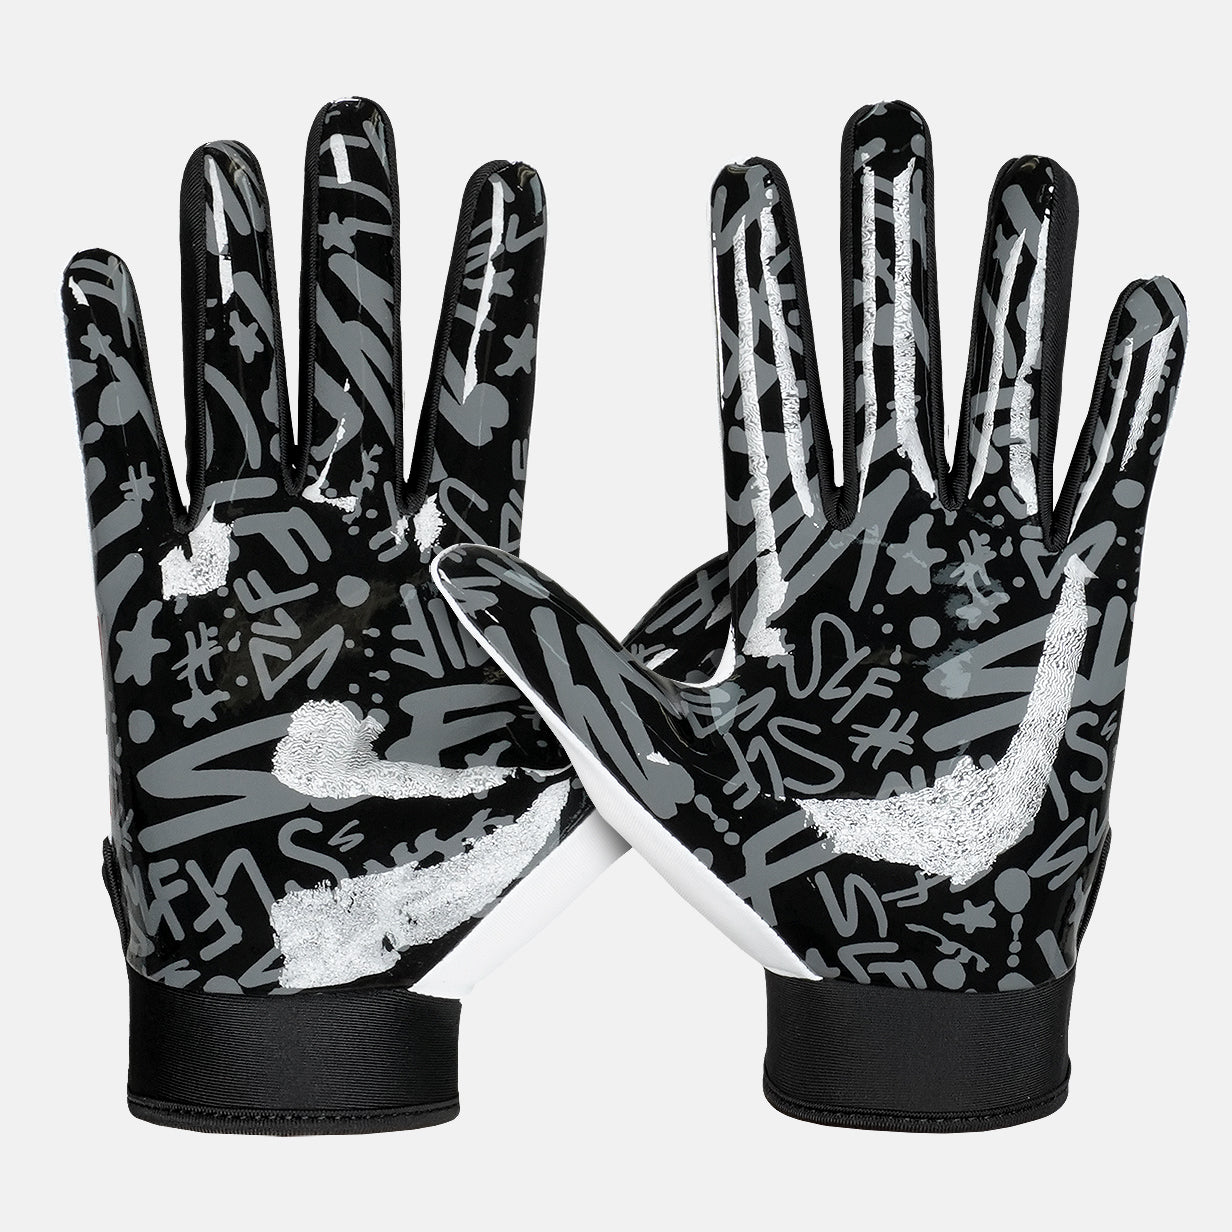 Skeemteam Football Gloves White/Cool Grey